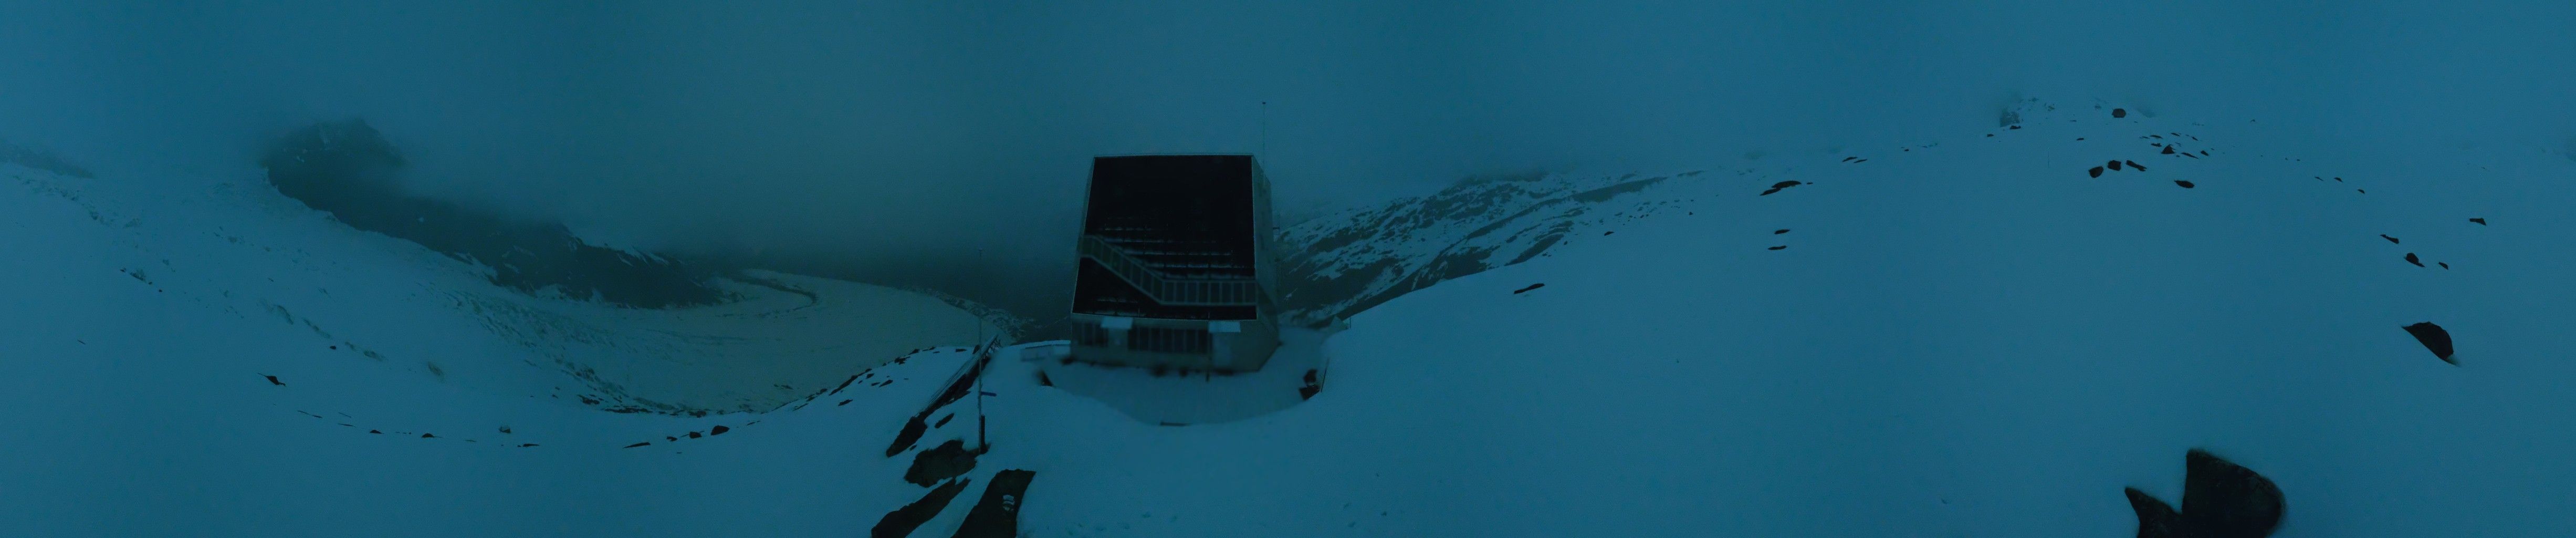 Zermatt: Monte Rosa